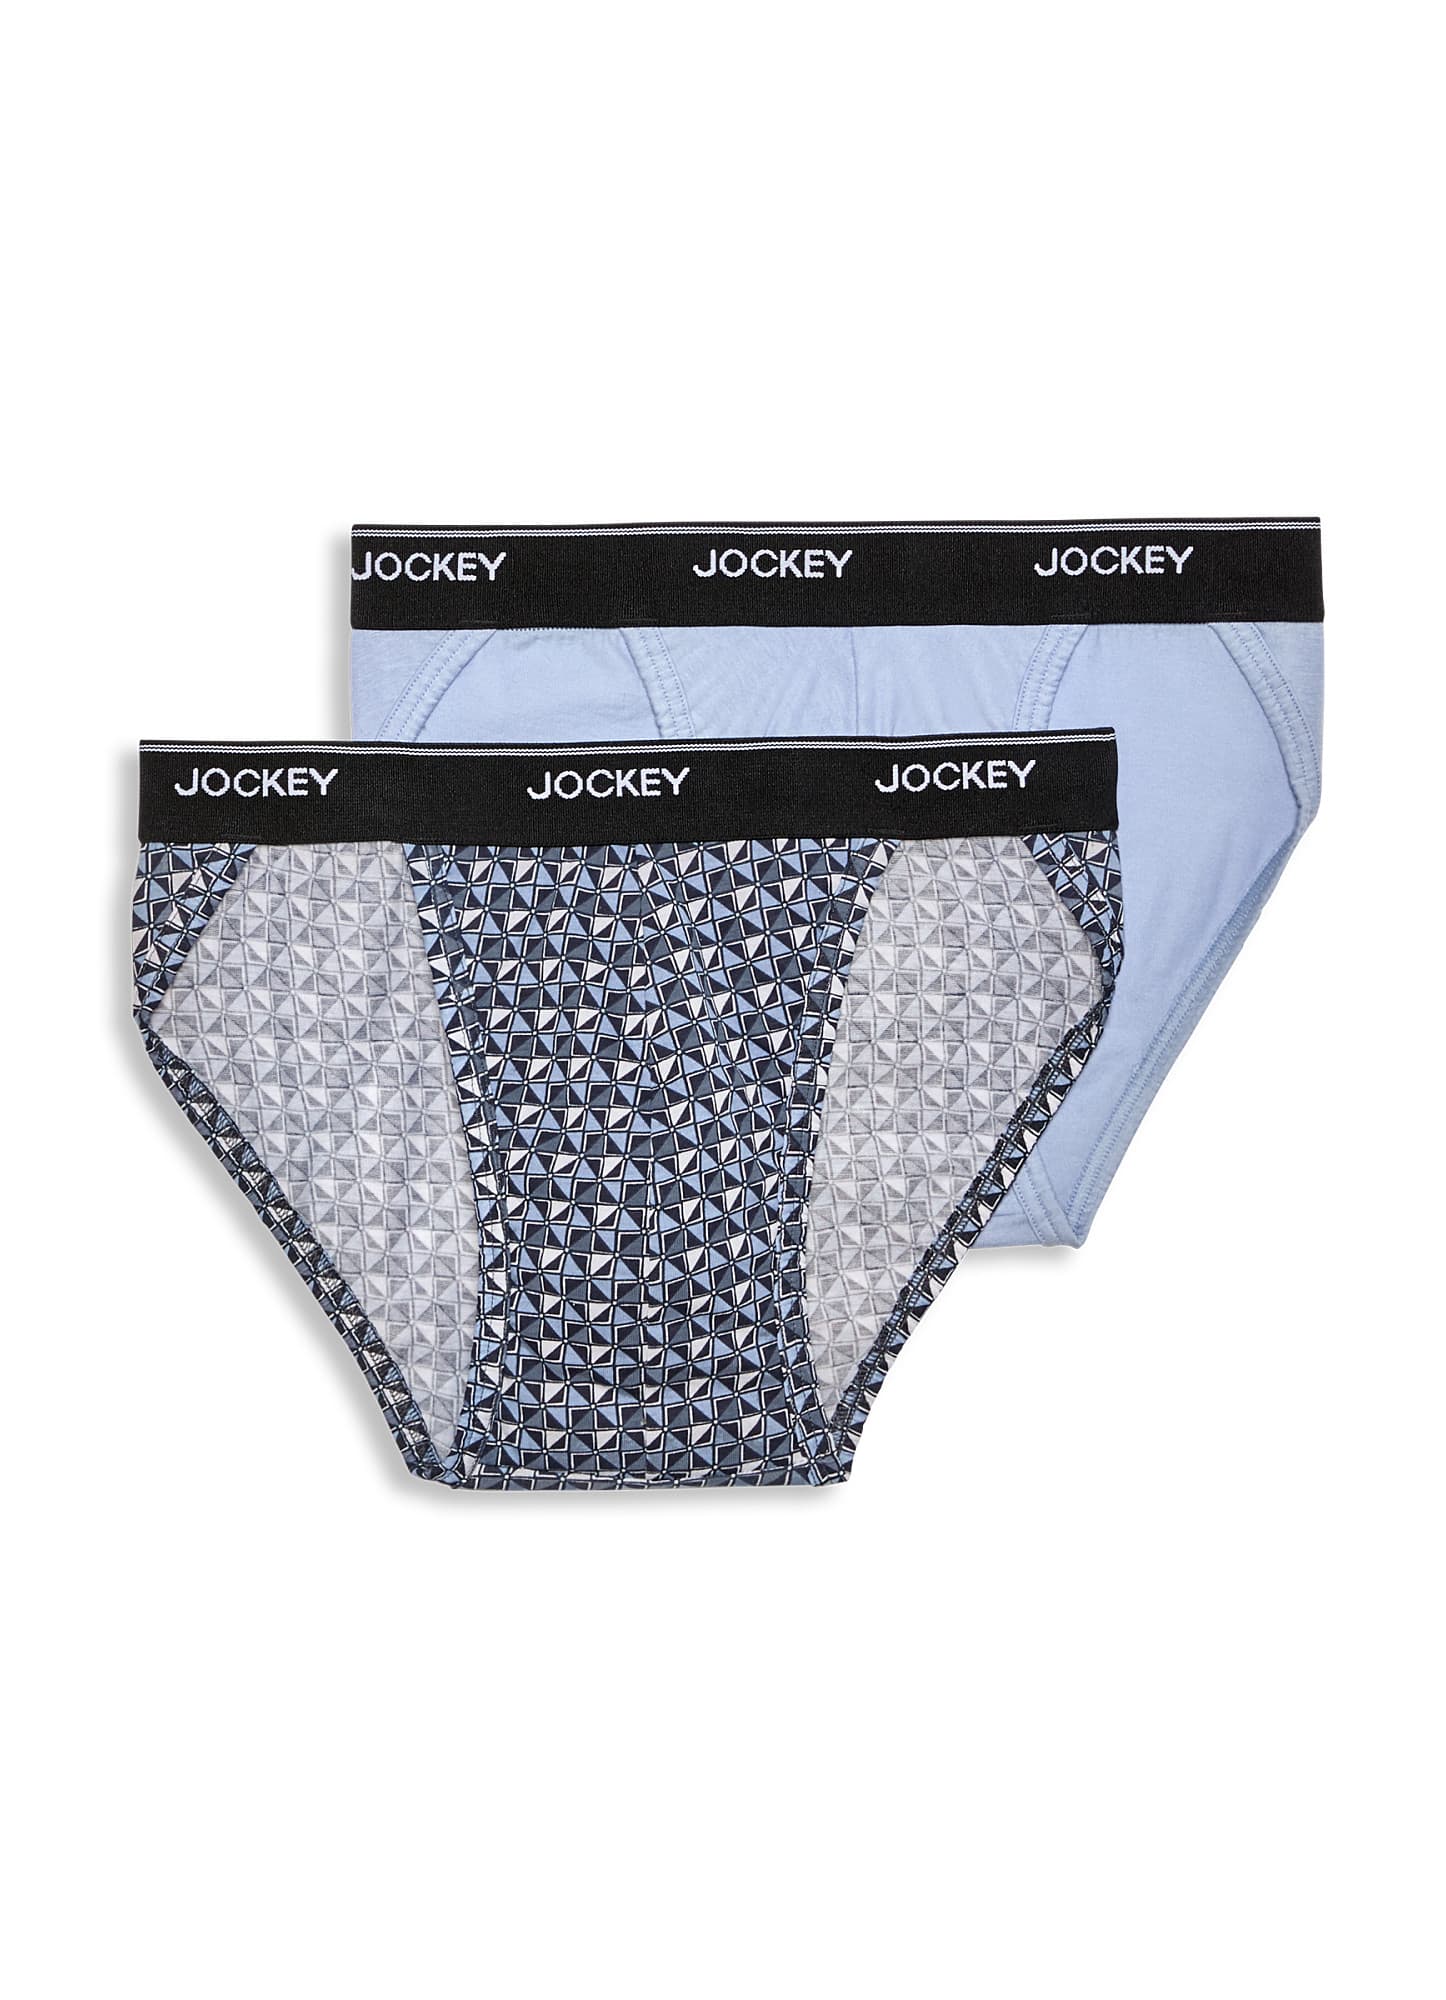 Jockey Elance Mens String Bikini 2 Pack 100% Cotton White Small 28-30 Two  Pack 